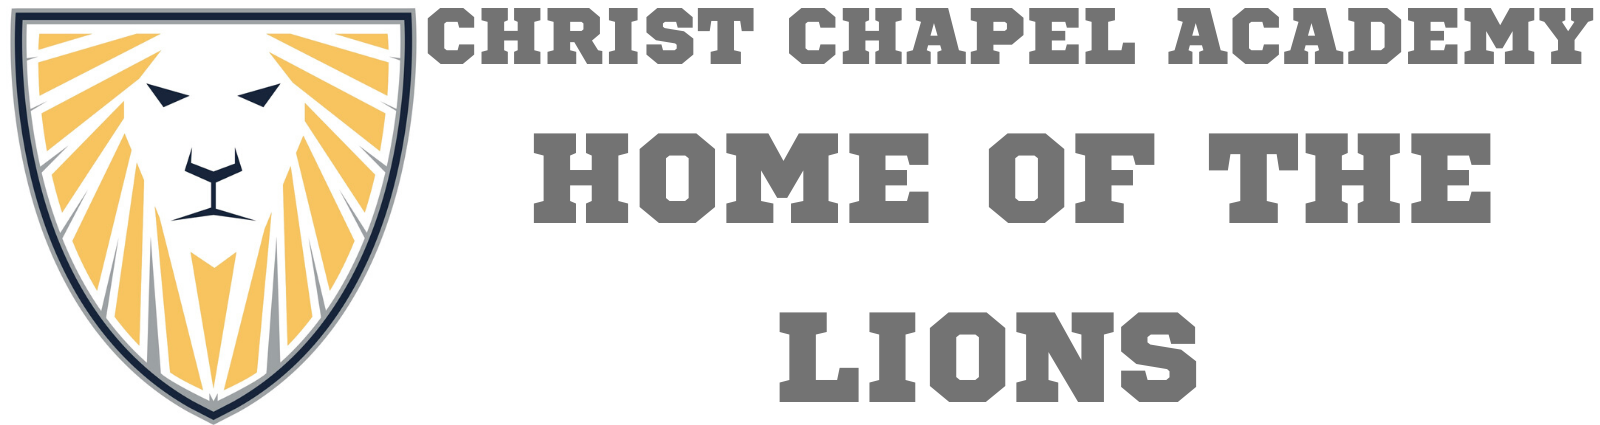 Athletics - Christ Chapel Academy